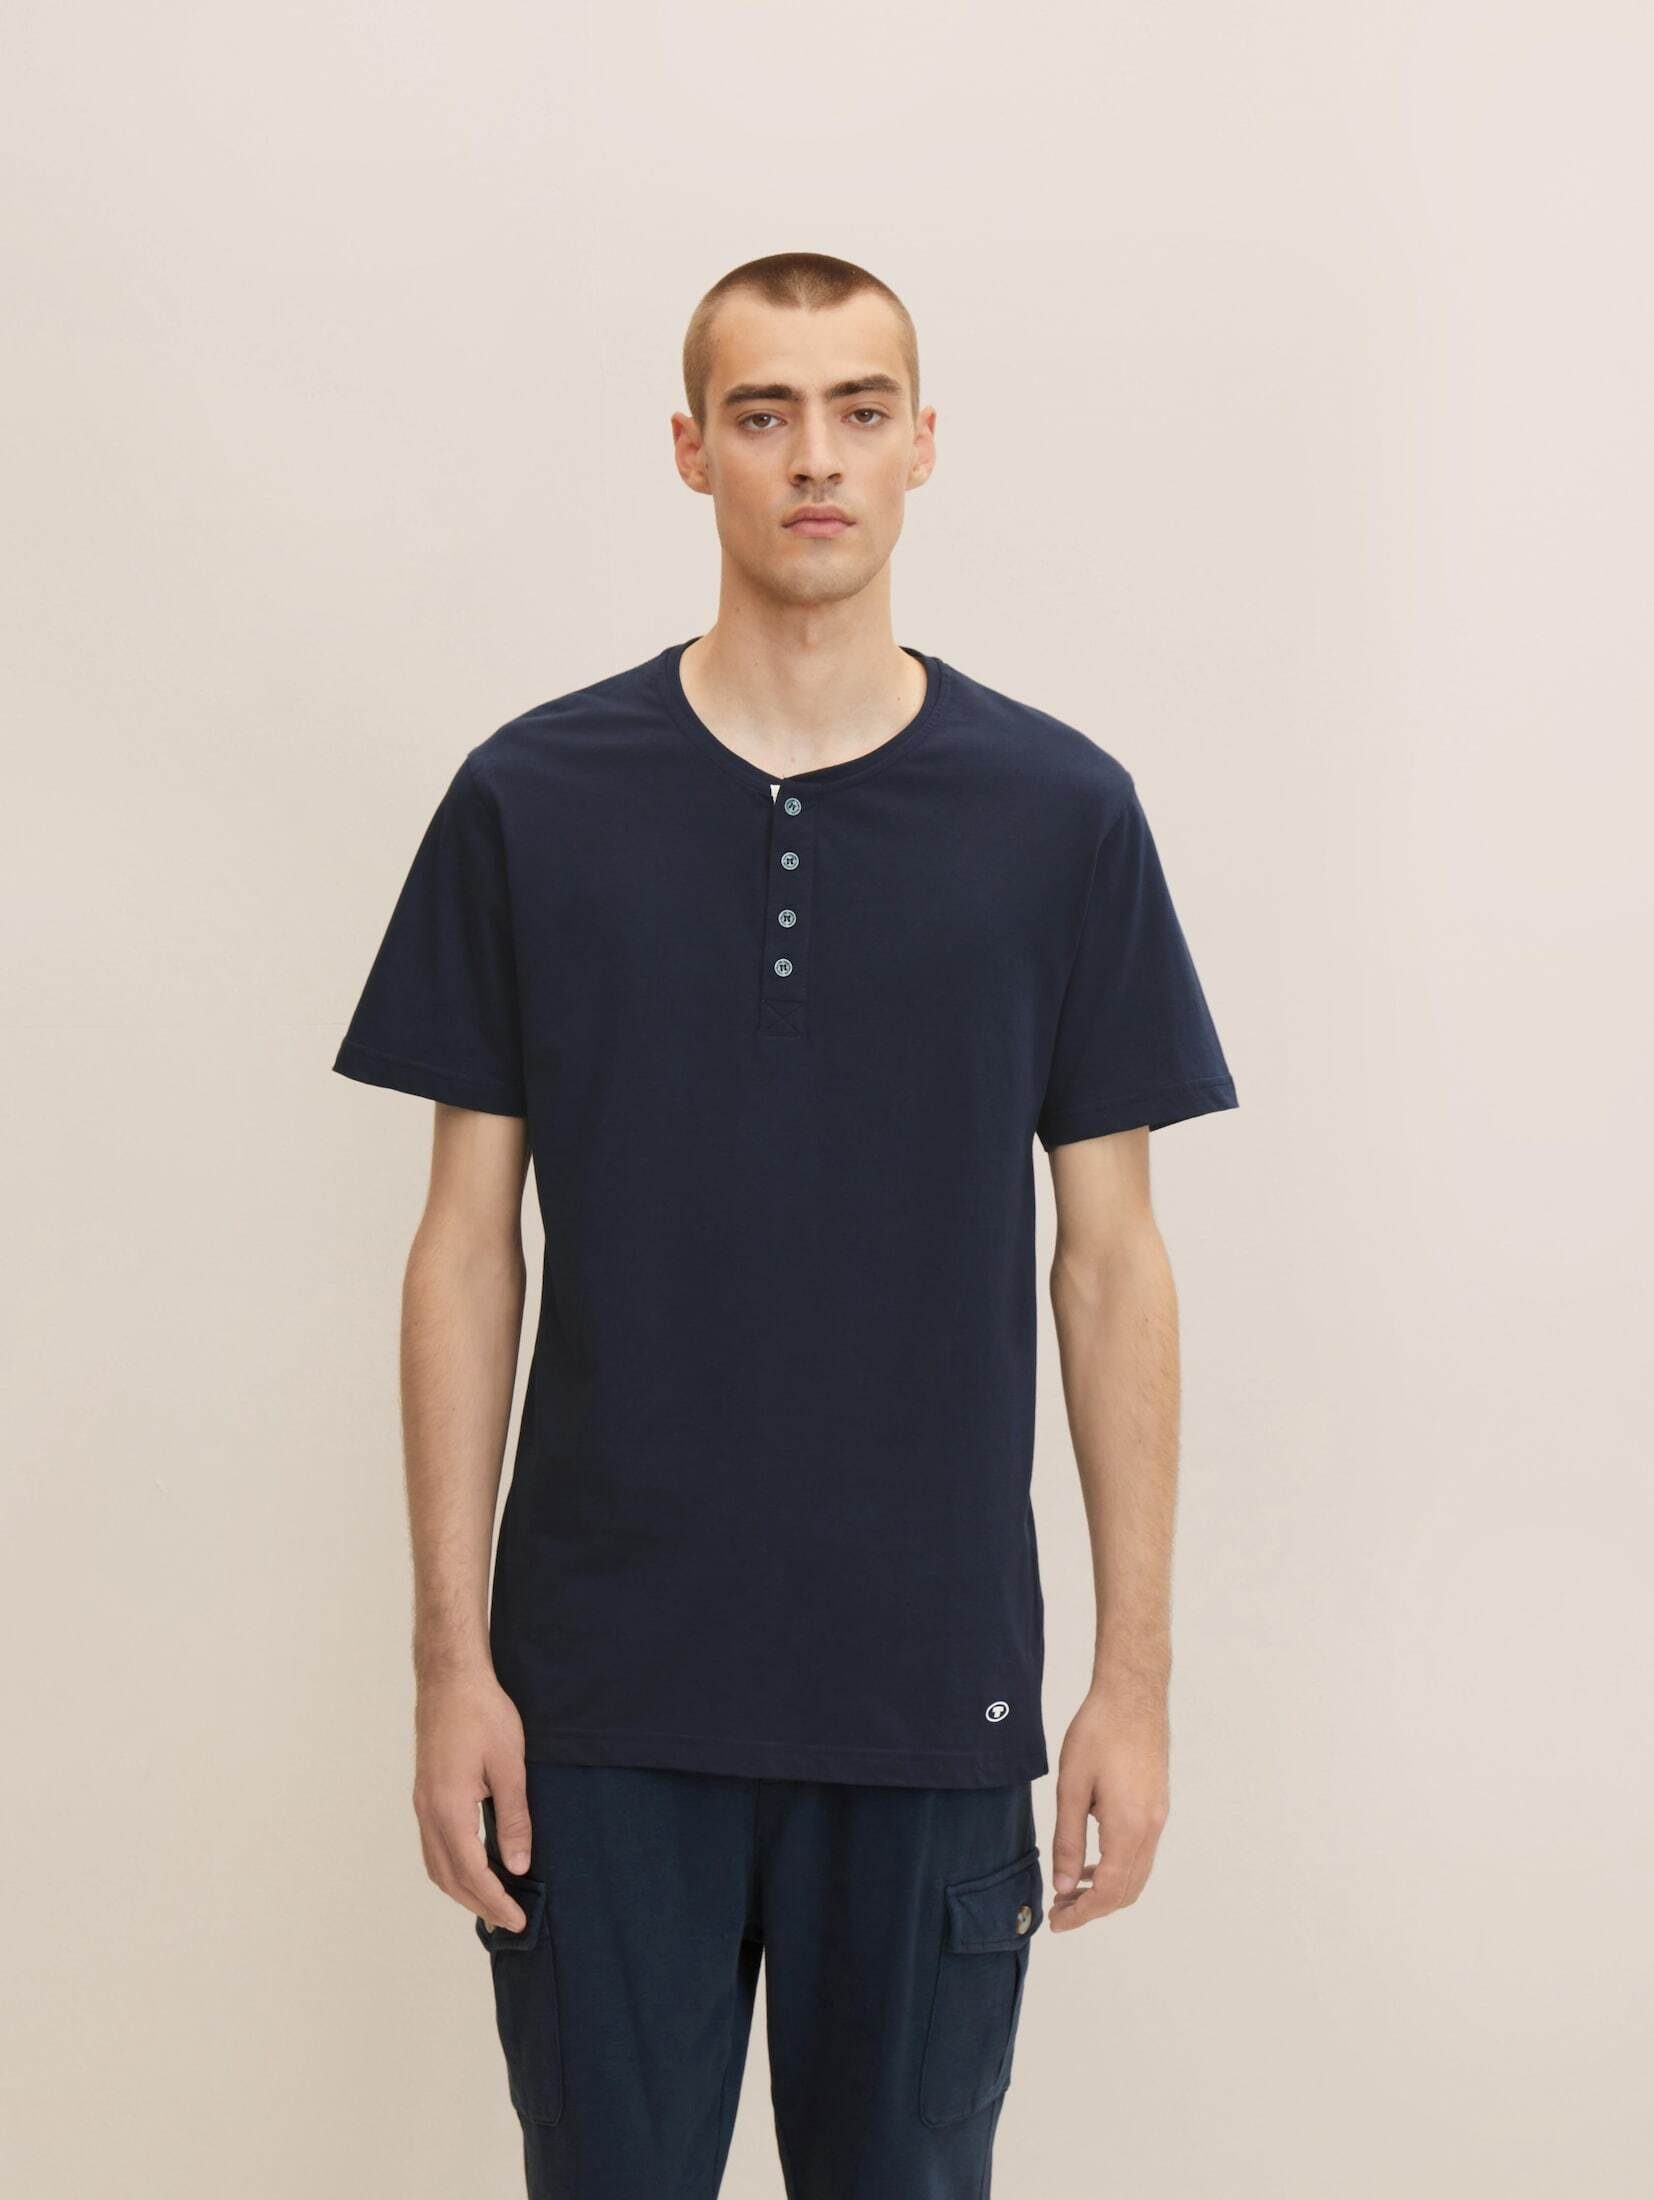 TOM blau-dunkel-uni Pyjamaoberteil TAILOR T-Shirt Pyjama